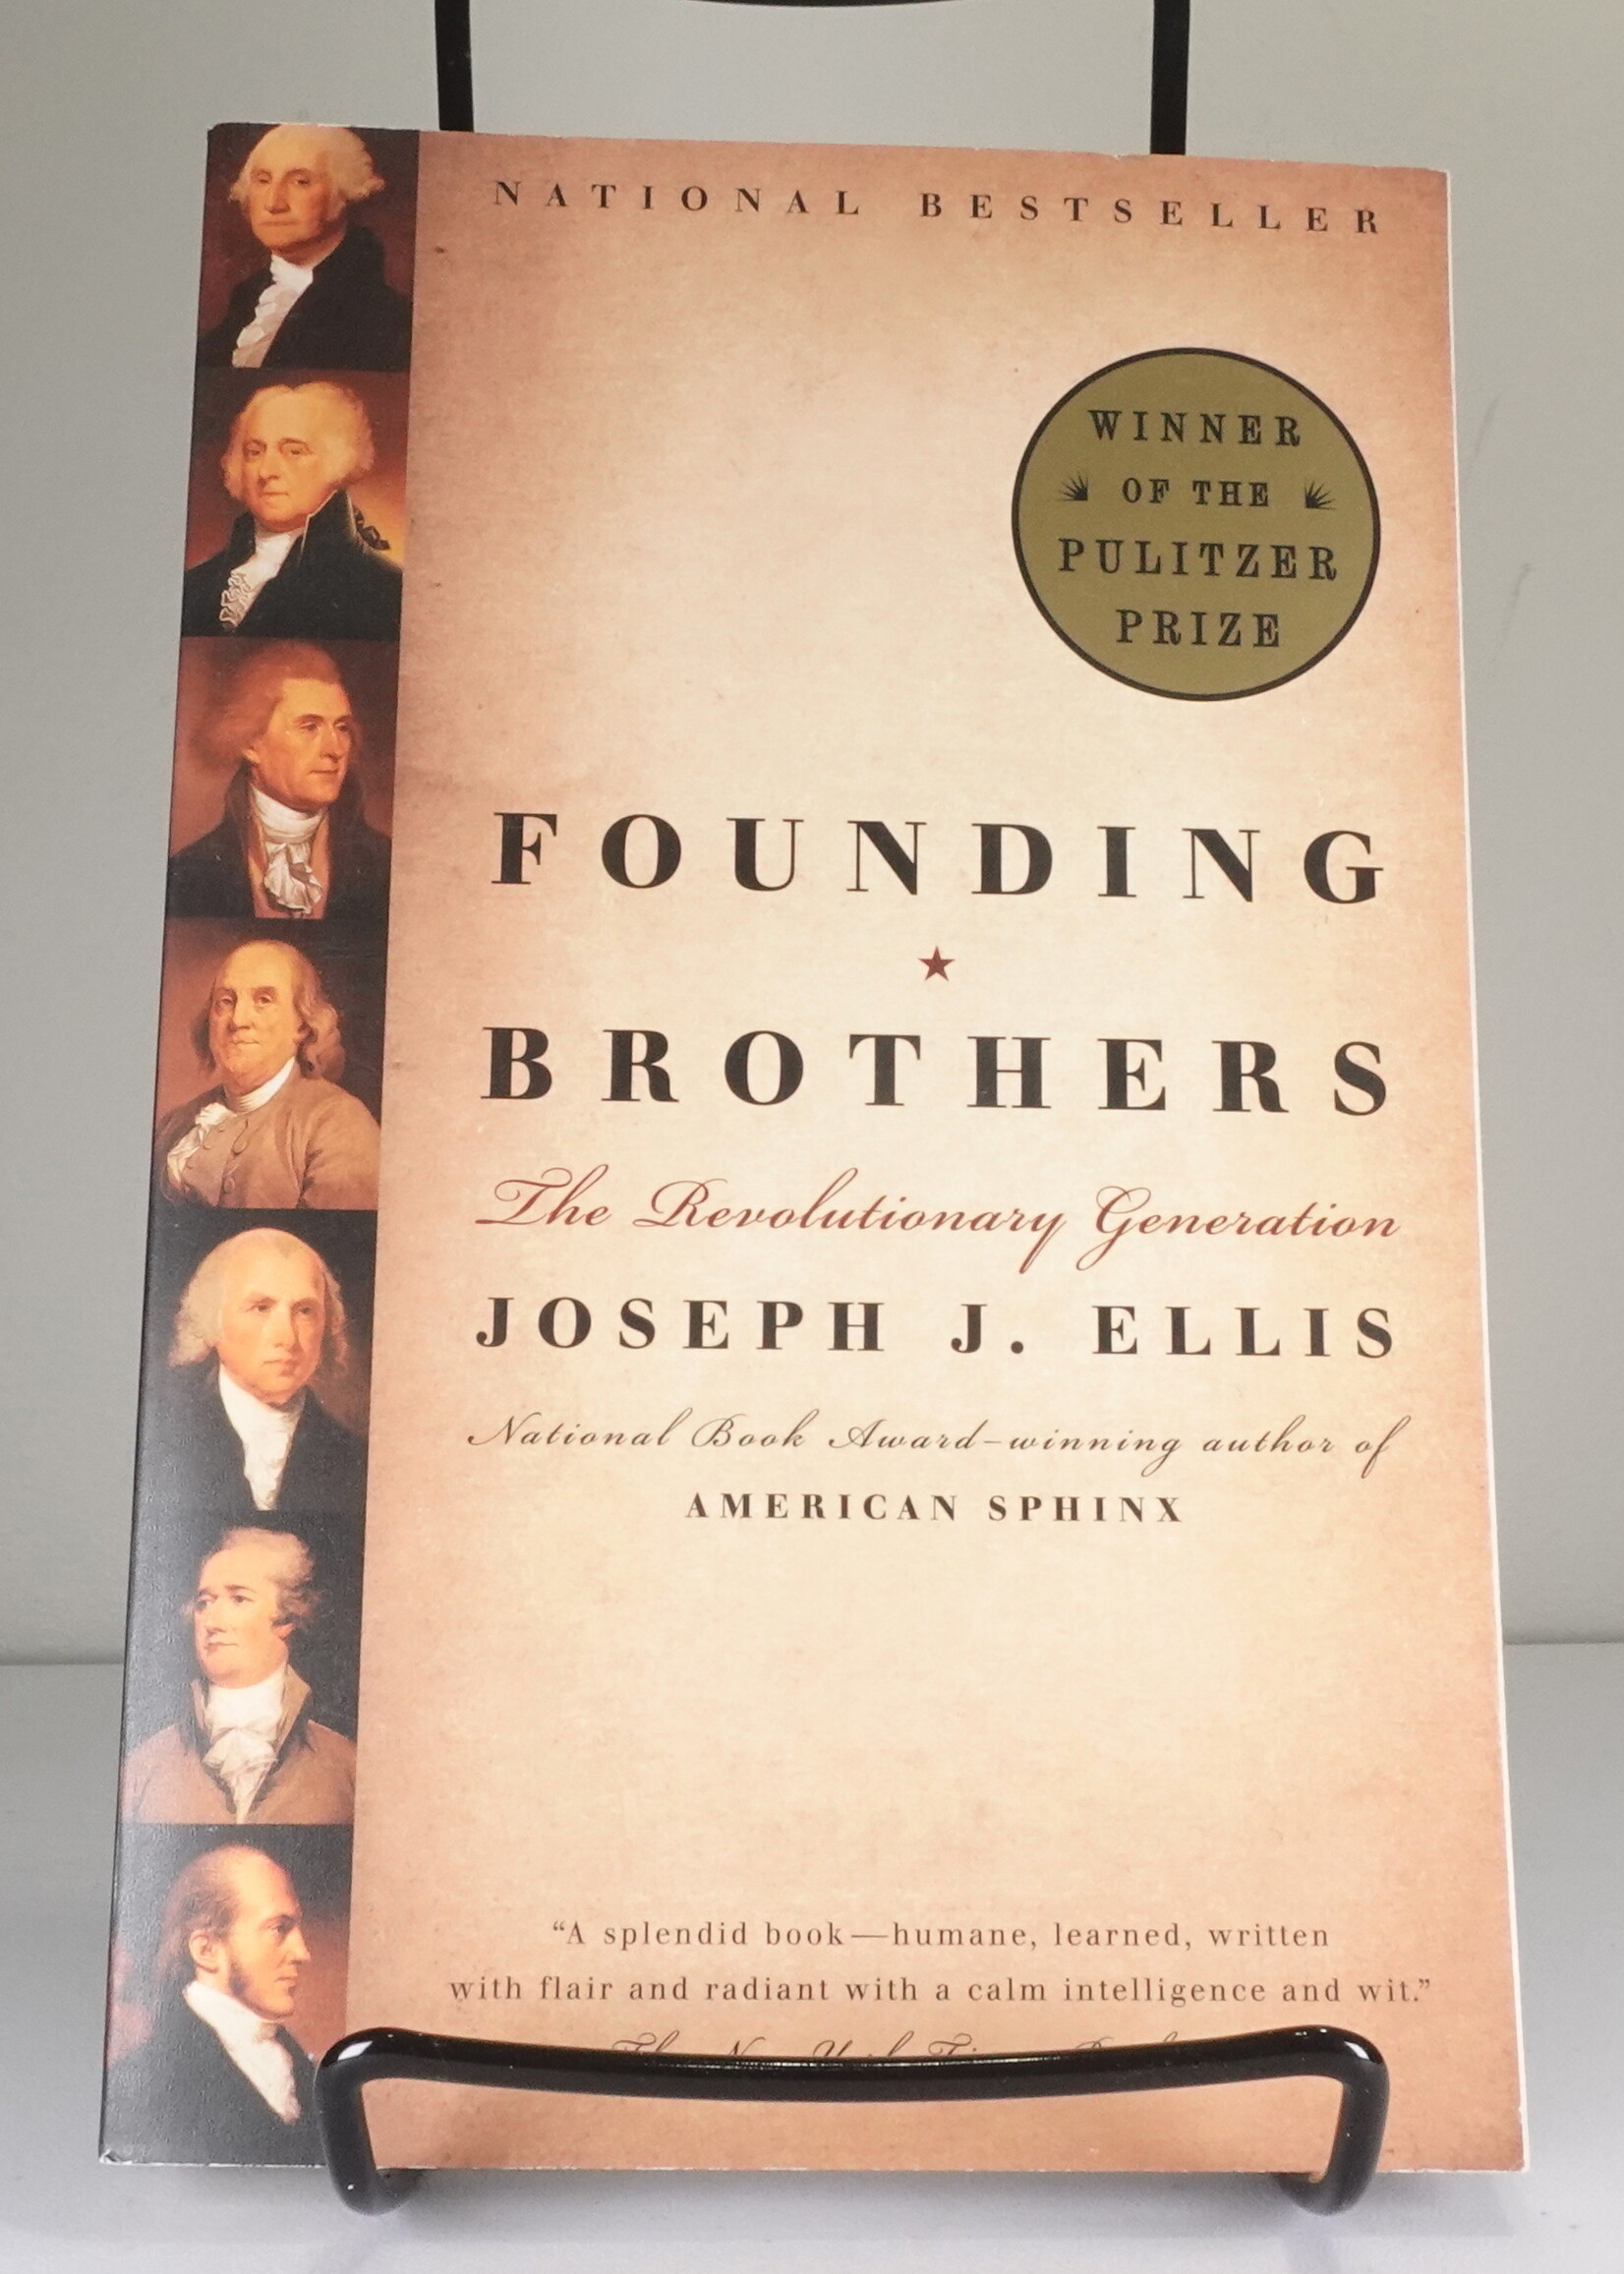 Vintage Founding Brothers (u)